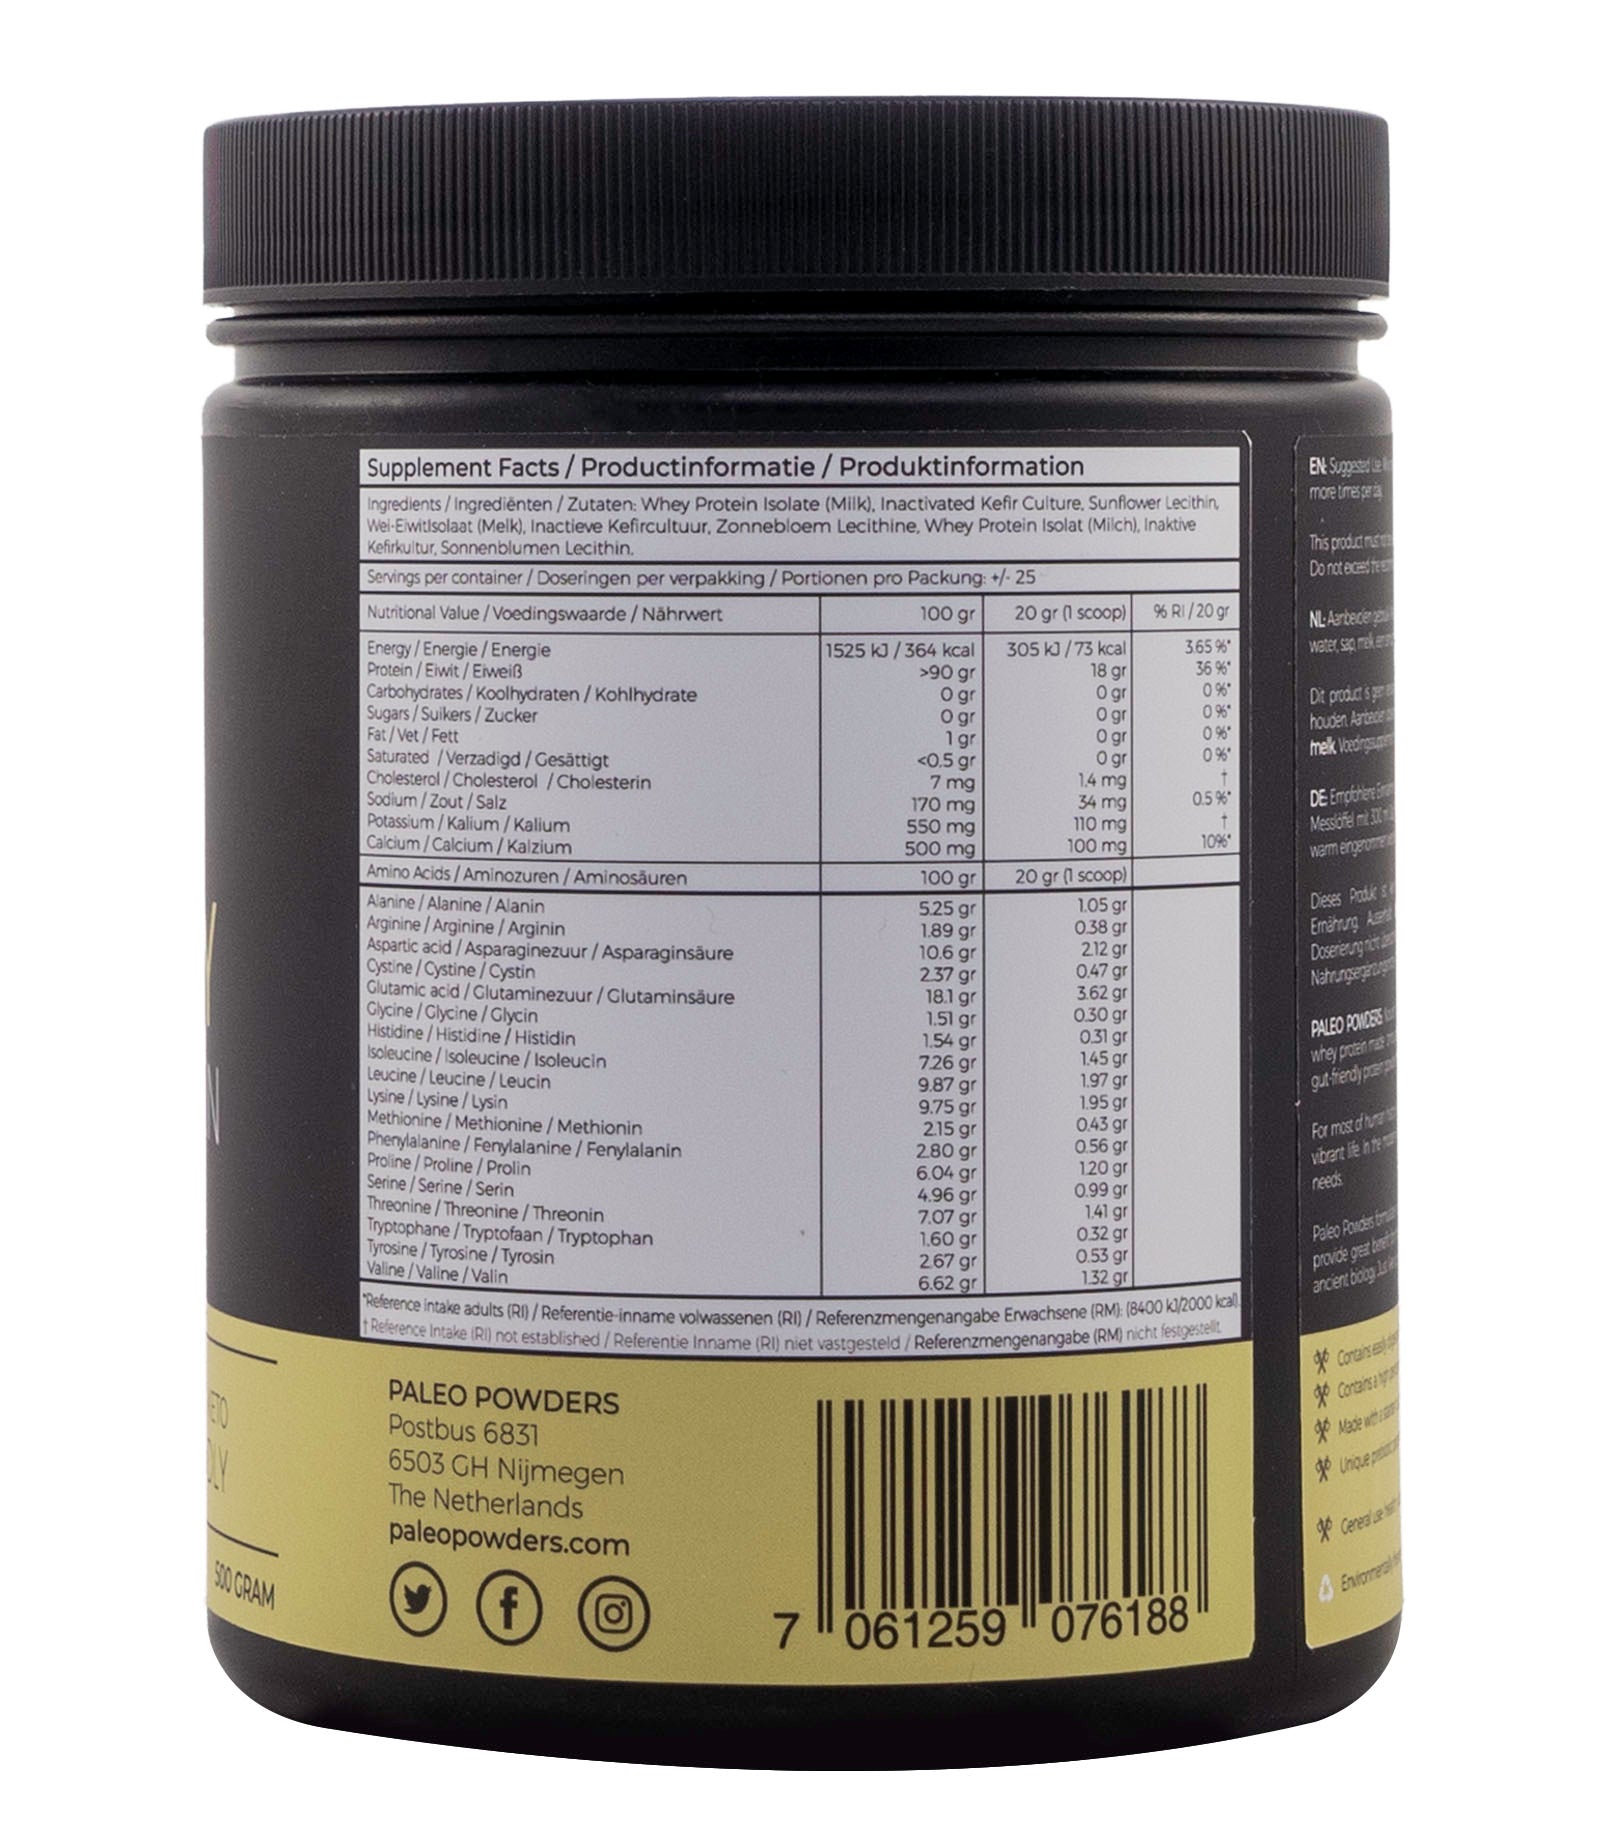 Kefir Whey - Fermented Protein Powder - 500 grams - Paleo Powders